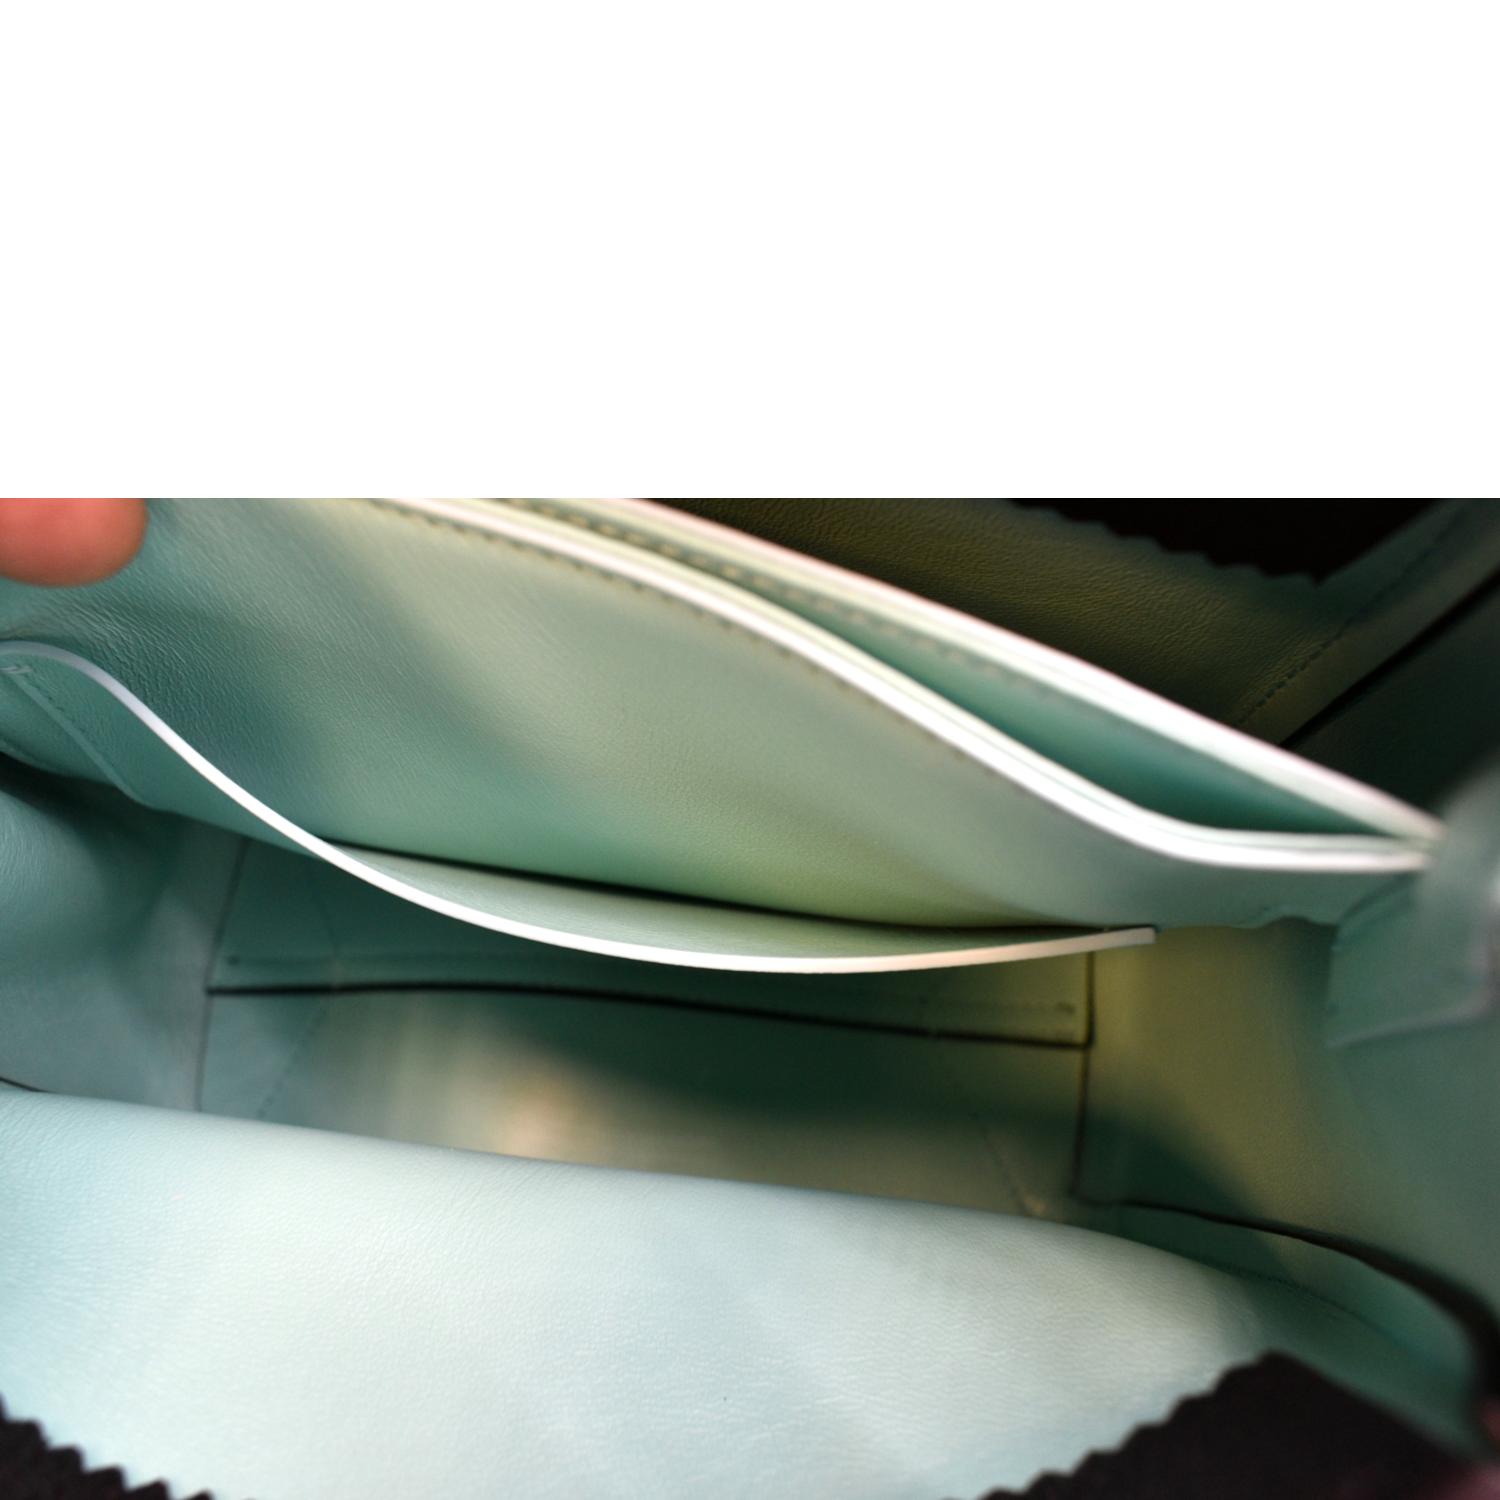 Tiffany & Co. Bag White Leather Handbag Purse Grain